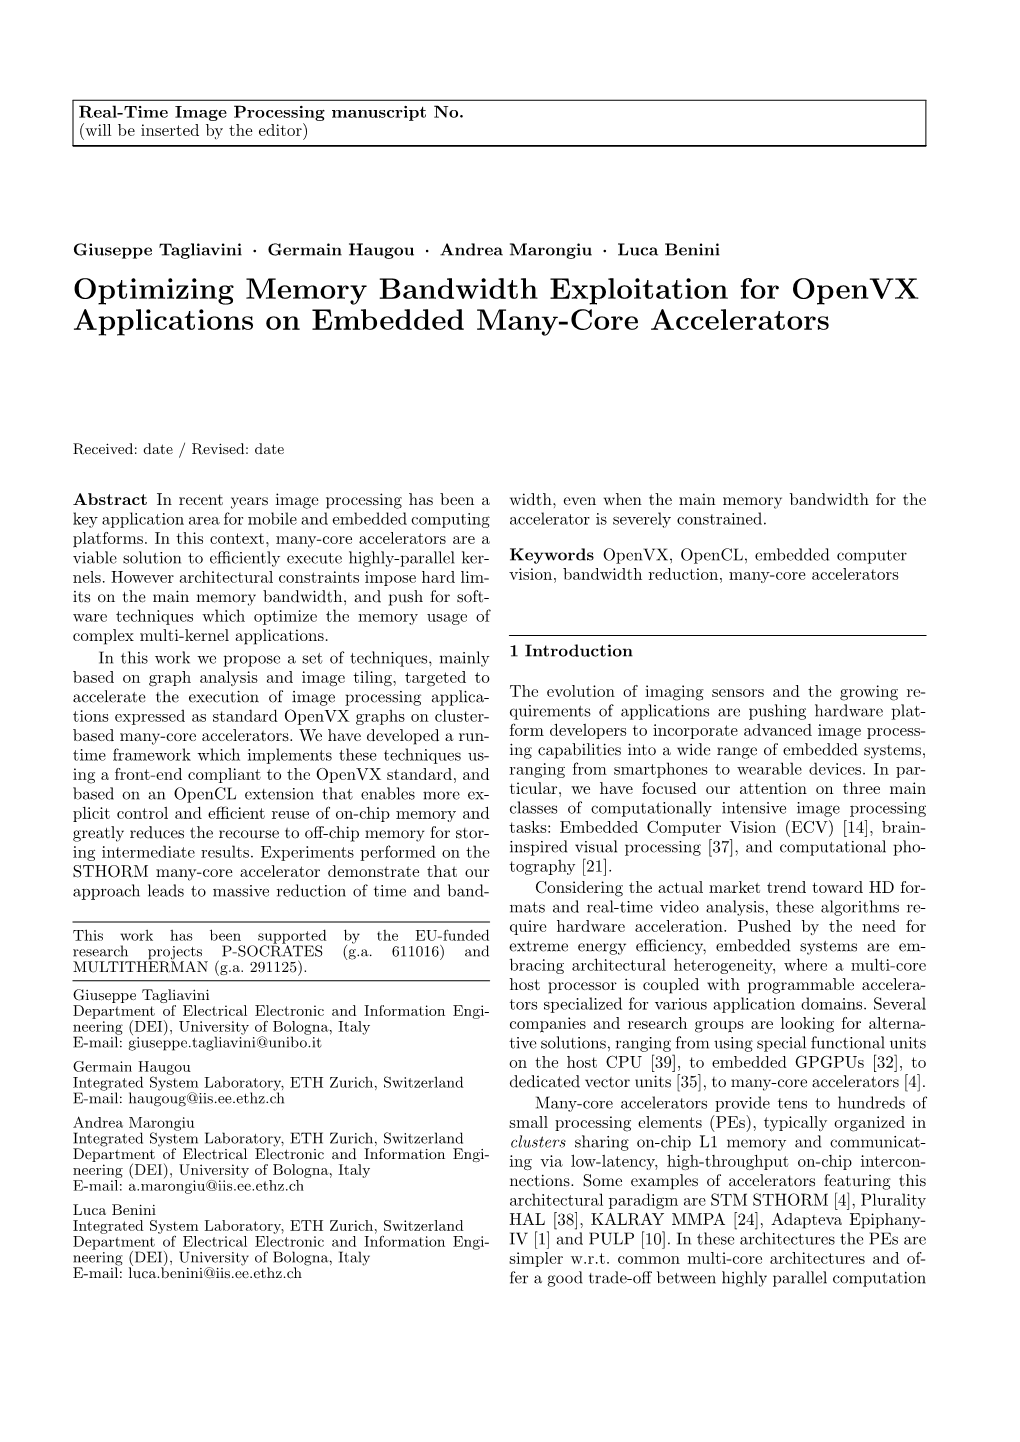 Optimizing Memory Bandwidth Exploitation for Openvx Applications on Embedded Many-Core Accelerators